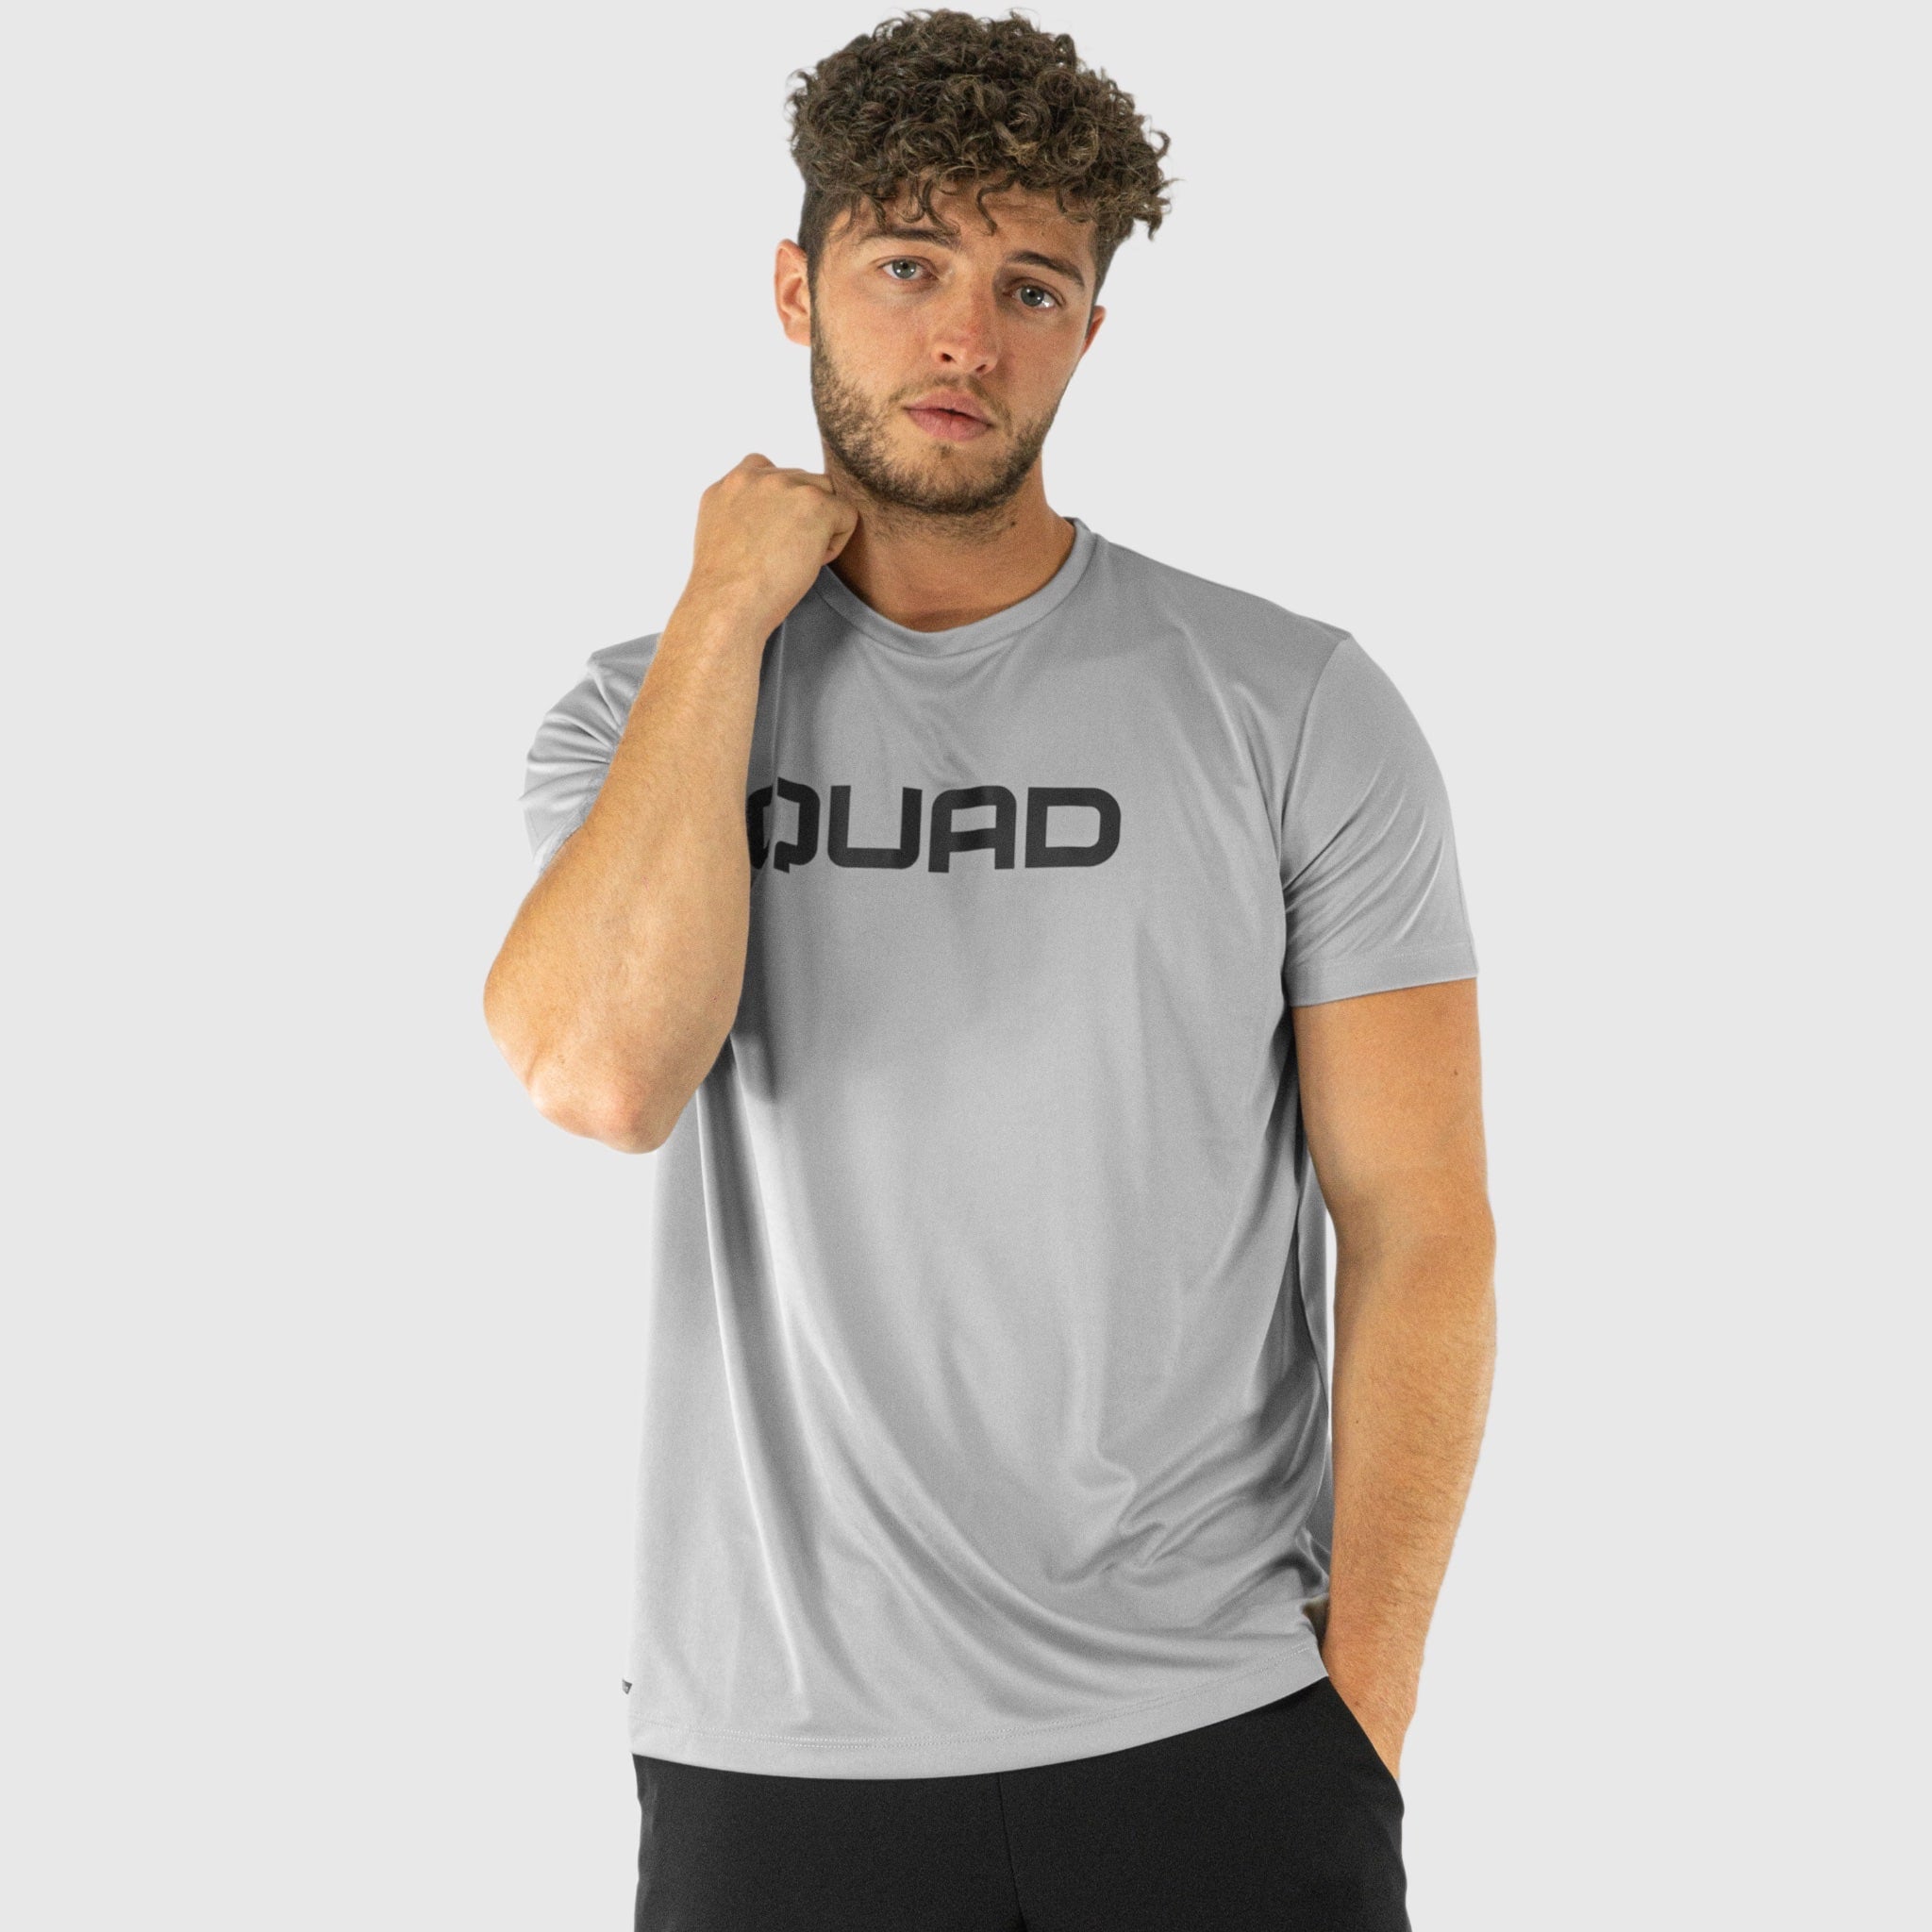 Quad Padel Essential T-Shirt grey front side